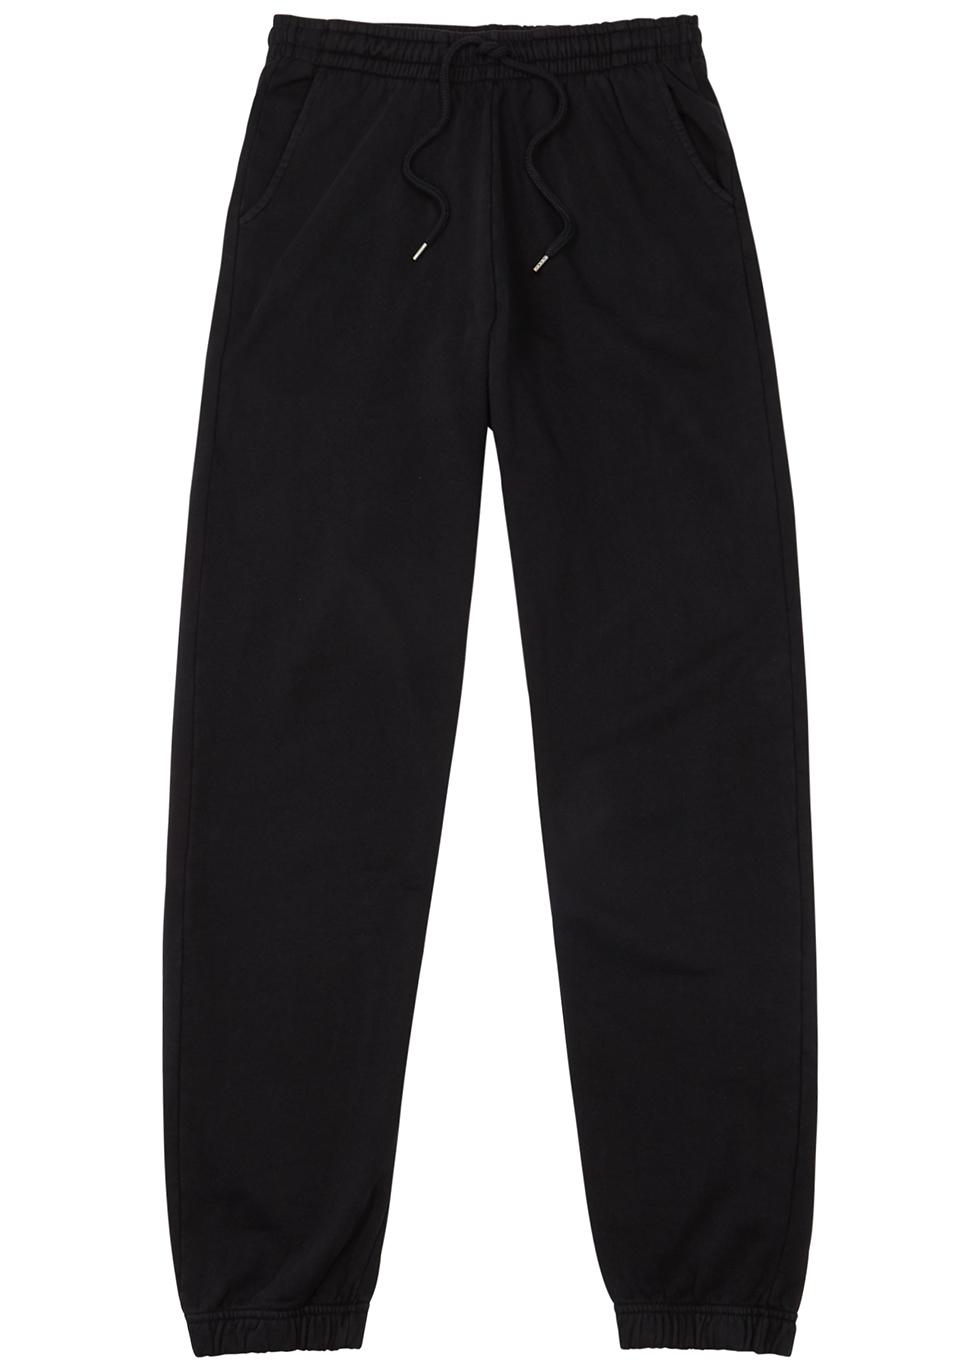 Black cotton sweatpants by COLORFUL STANDARD